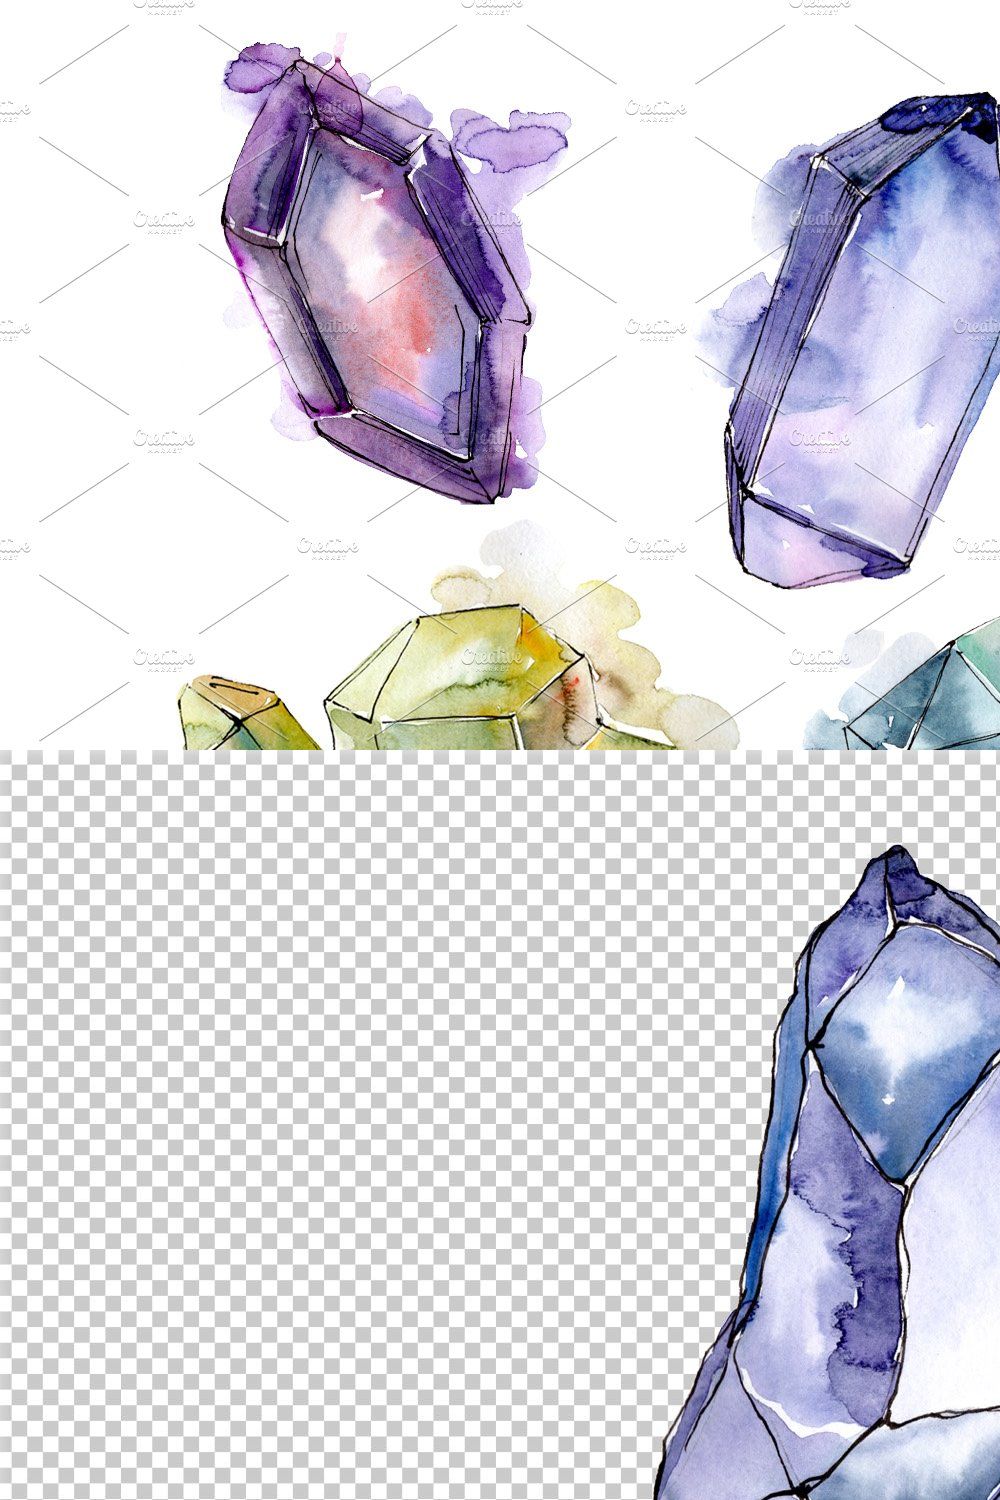 Aquarelle crystals mineral PNG set pinterest preview image.